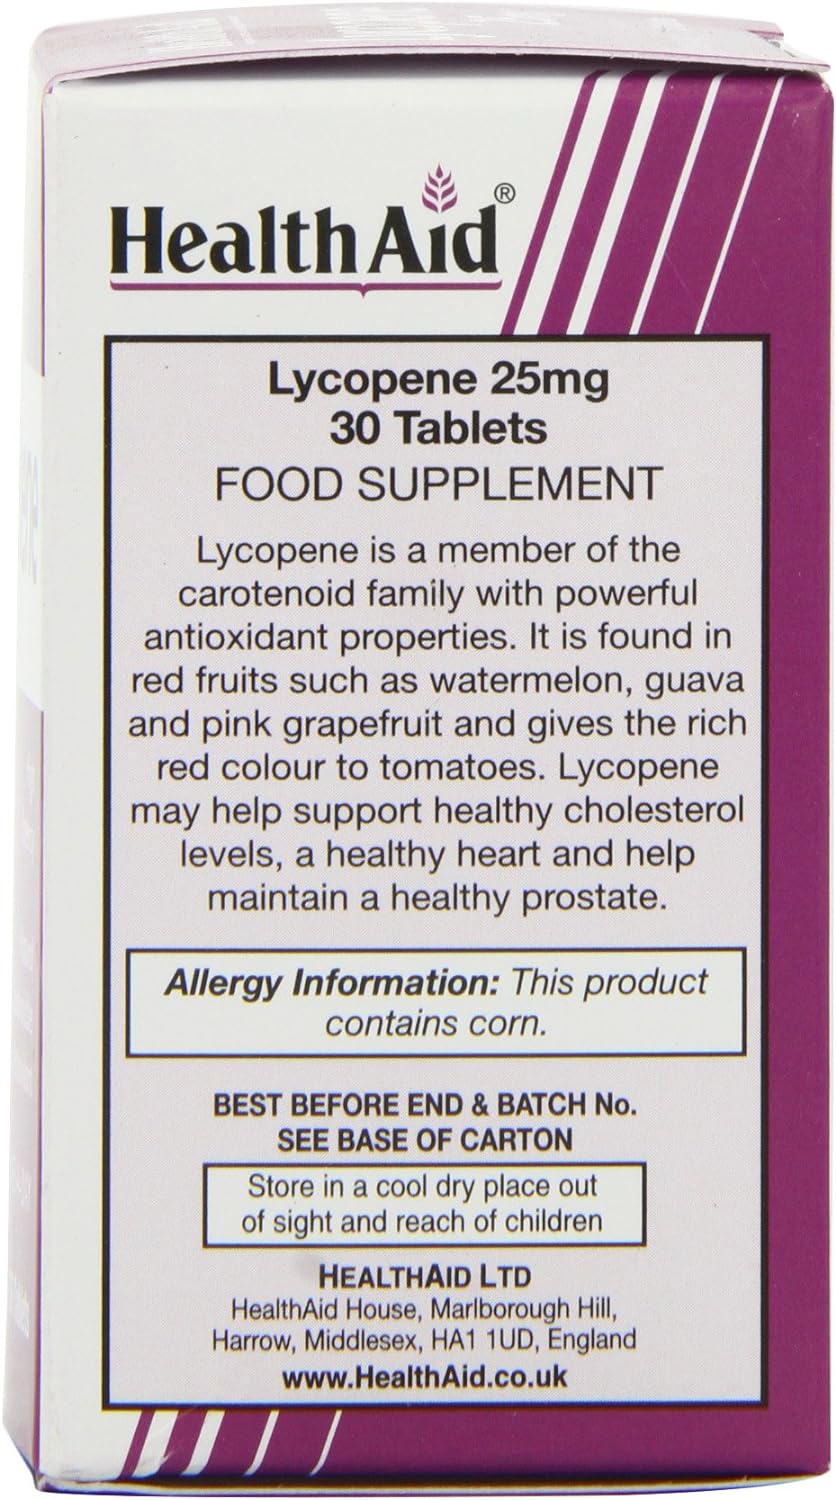 HealthAid Lycopene 25mg - 30 Tablets

